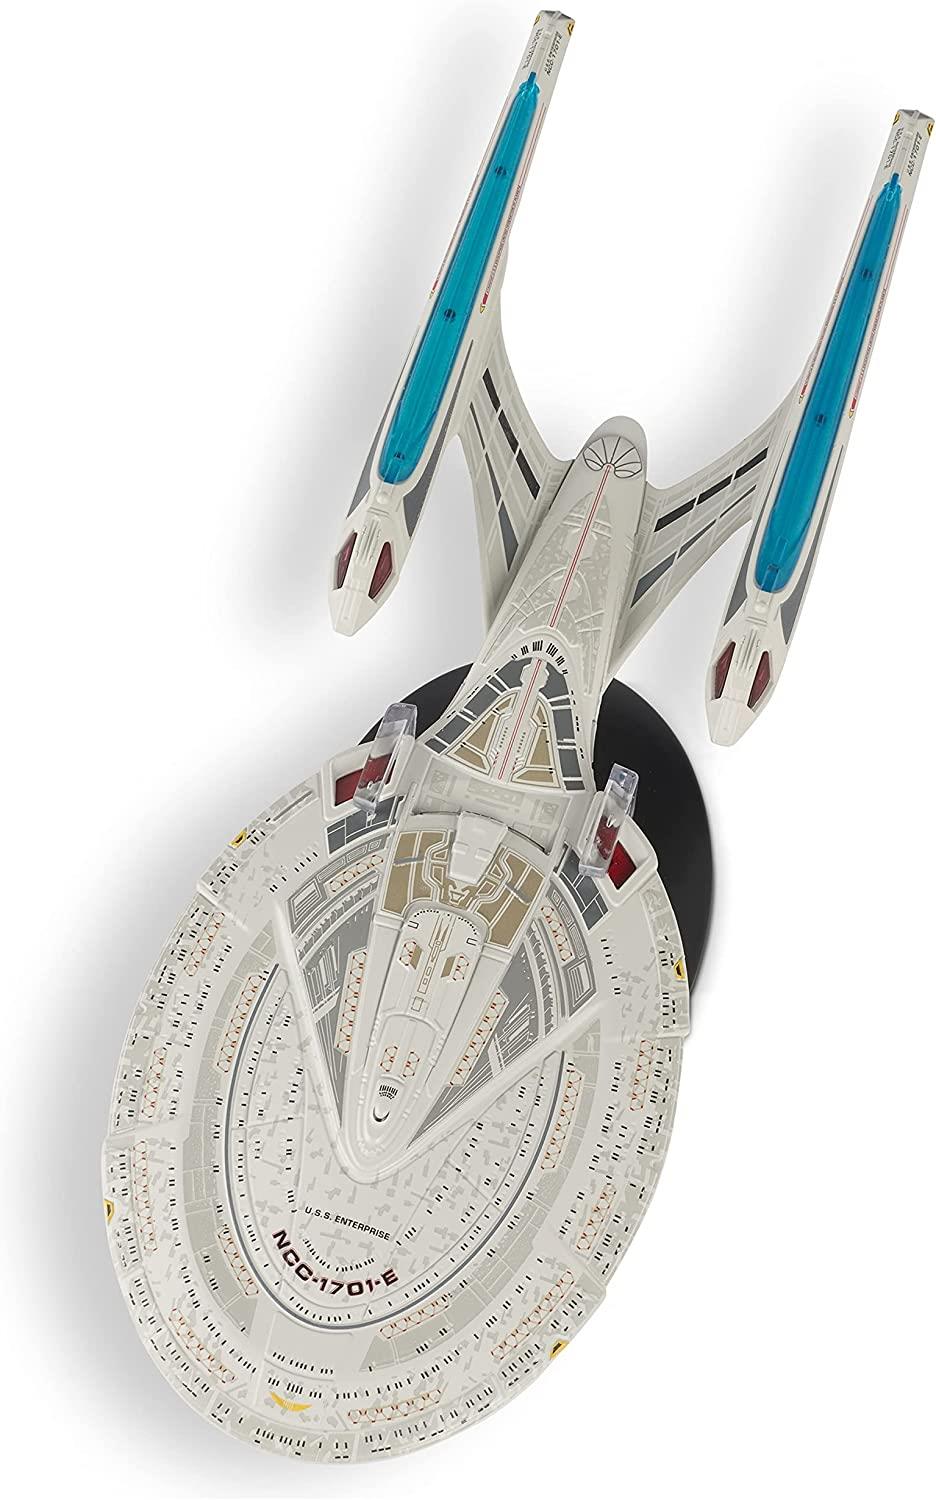 #03 U.S.S. Enterprise NCC-1701-E (Sovereign-class) XL EDITION Ship Model Die Cast Starship (Eaglemoss / Star Trek)